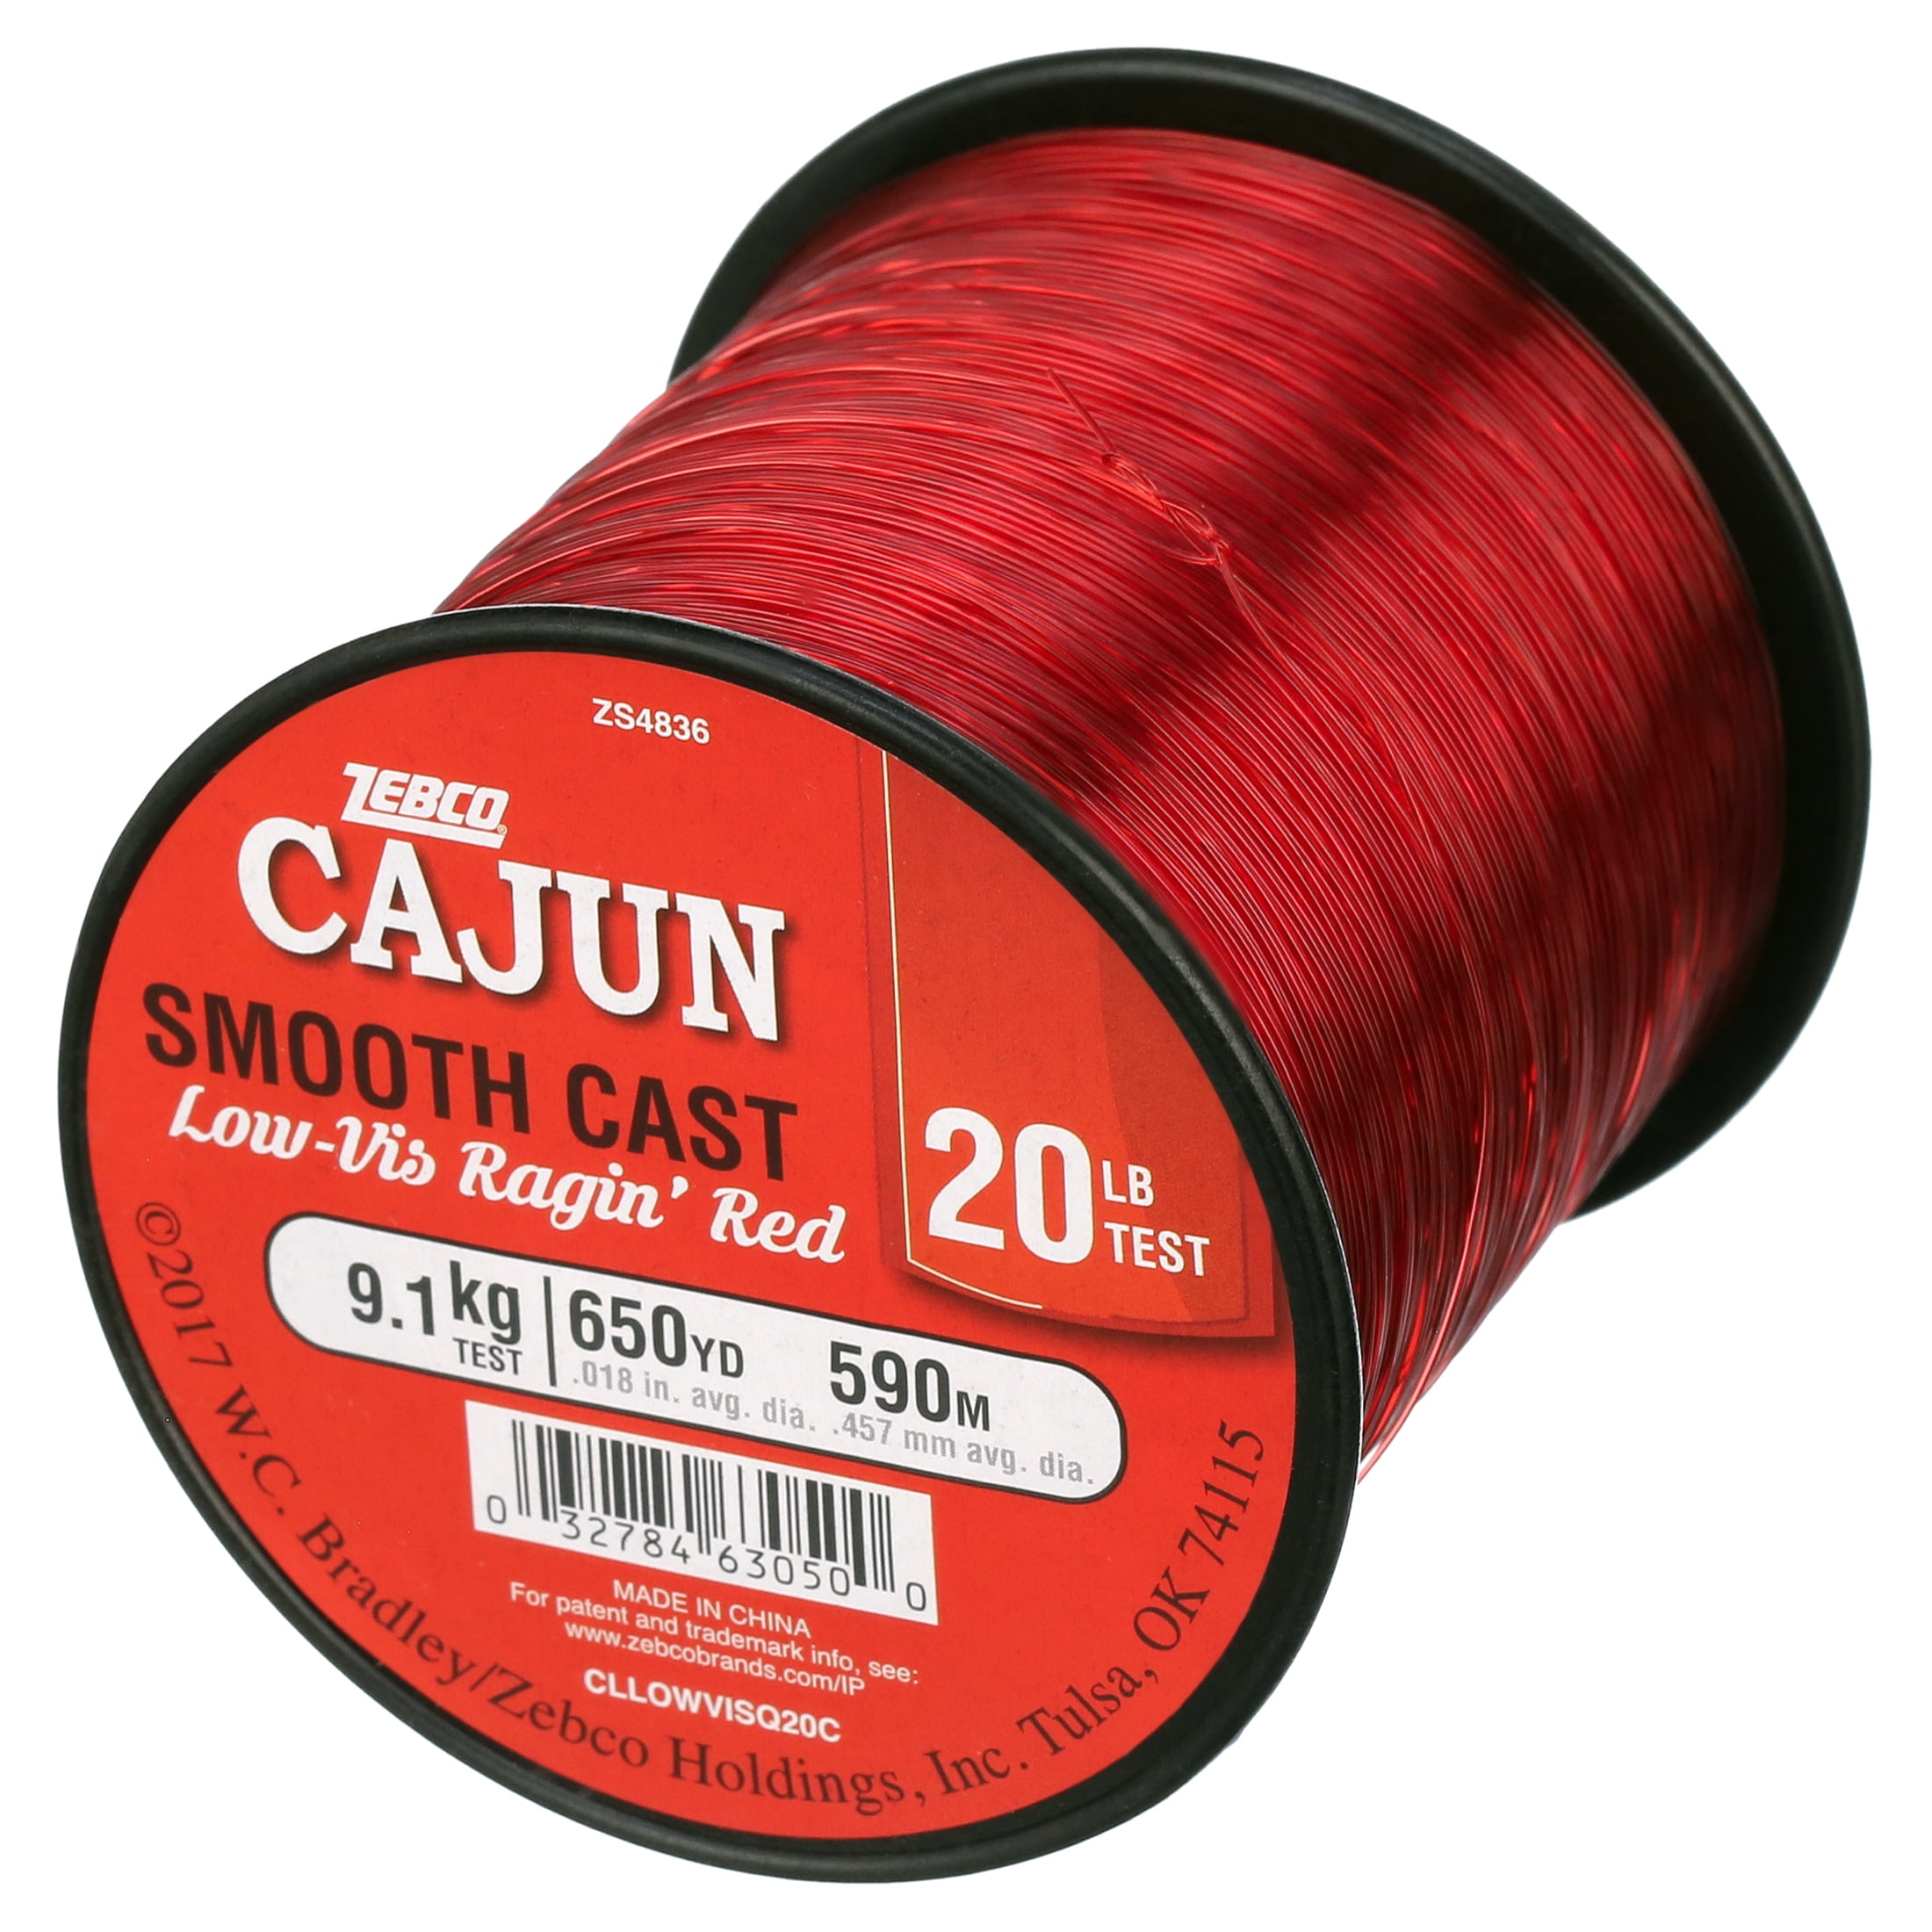 Cajun Fluorocarbon Line is Red Hot